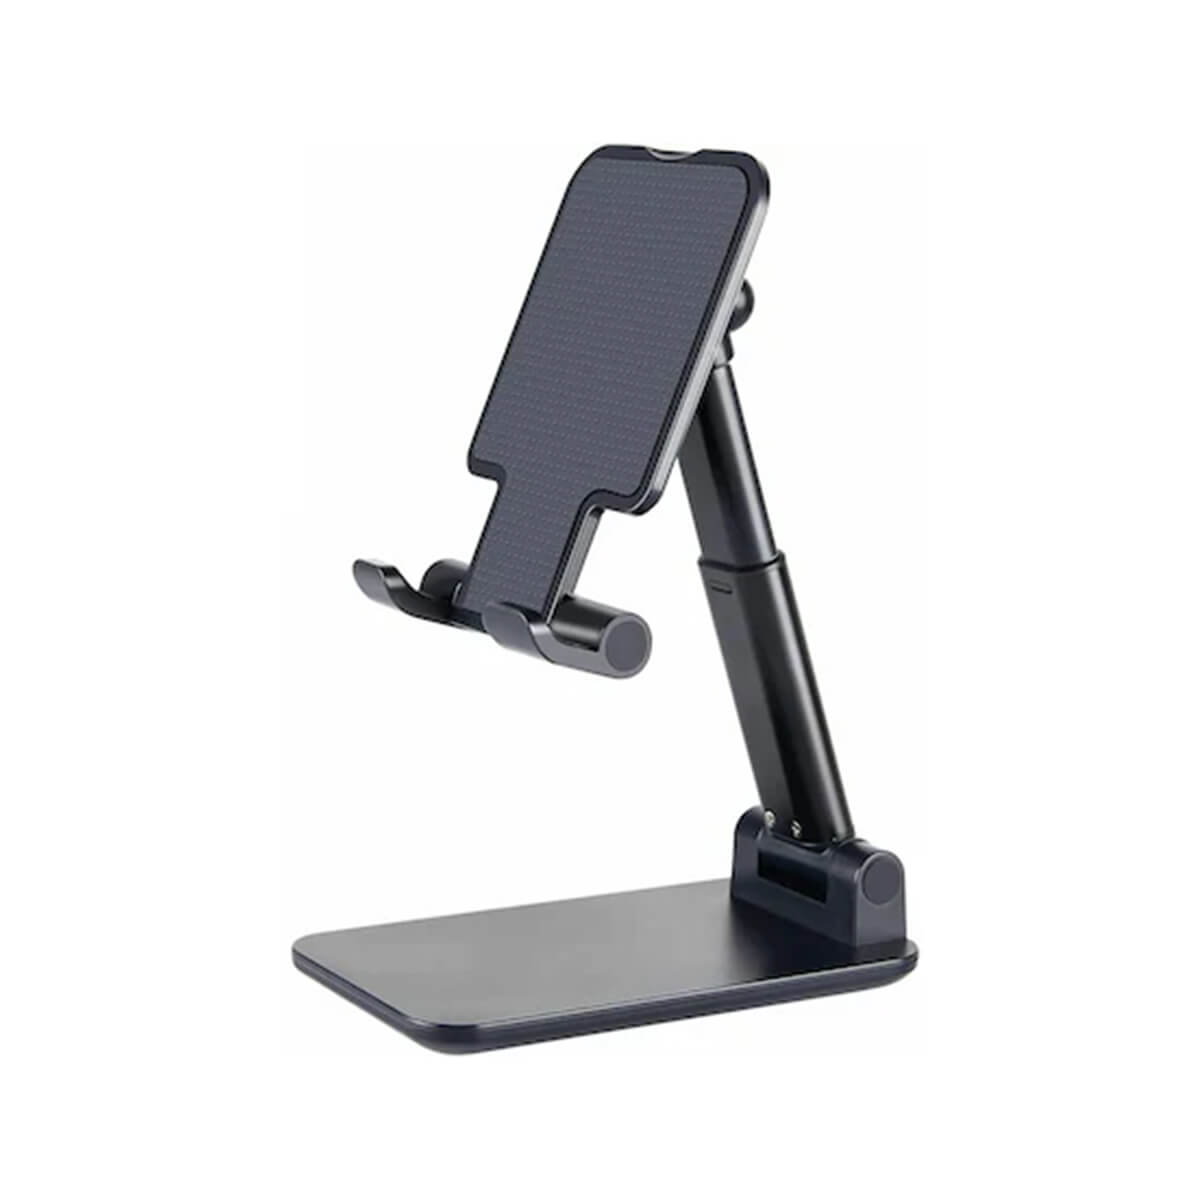 Folding Desk Mount for Phones and Tablets